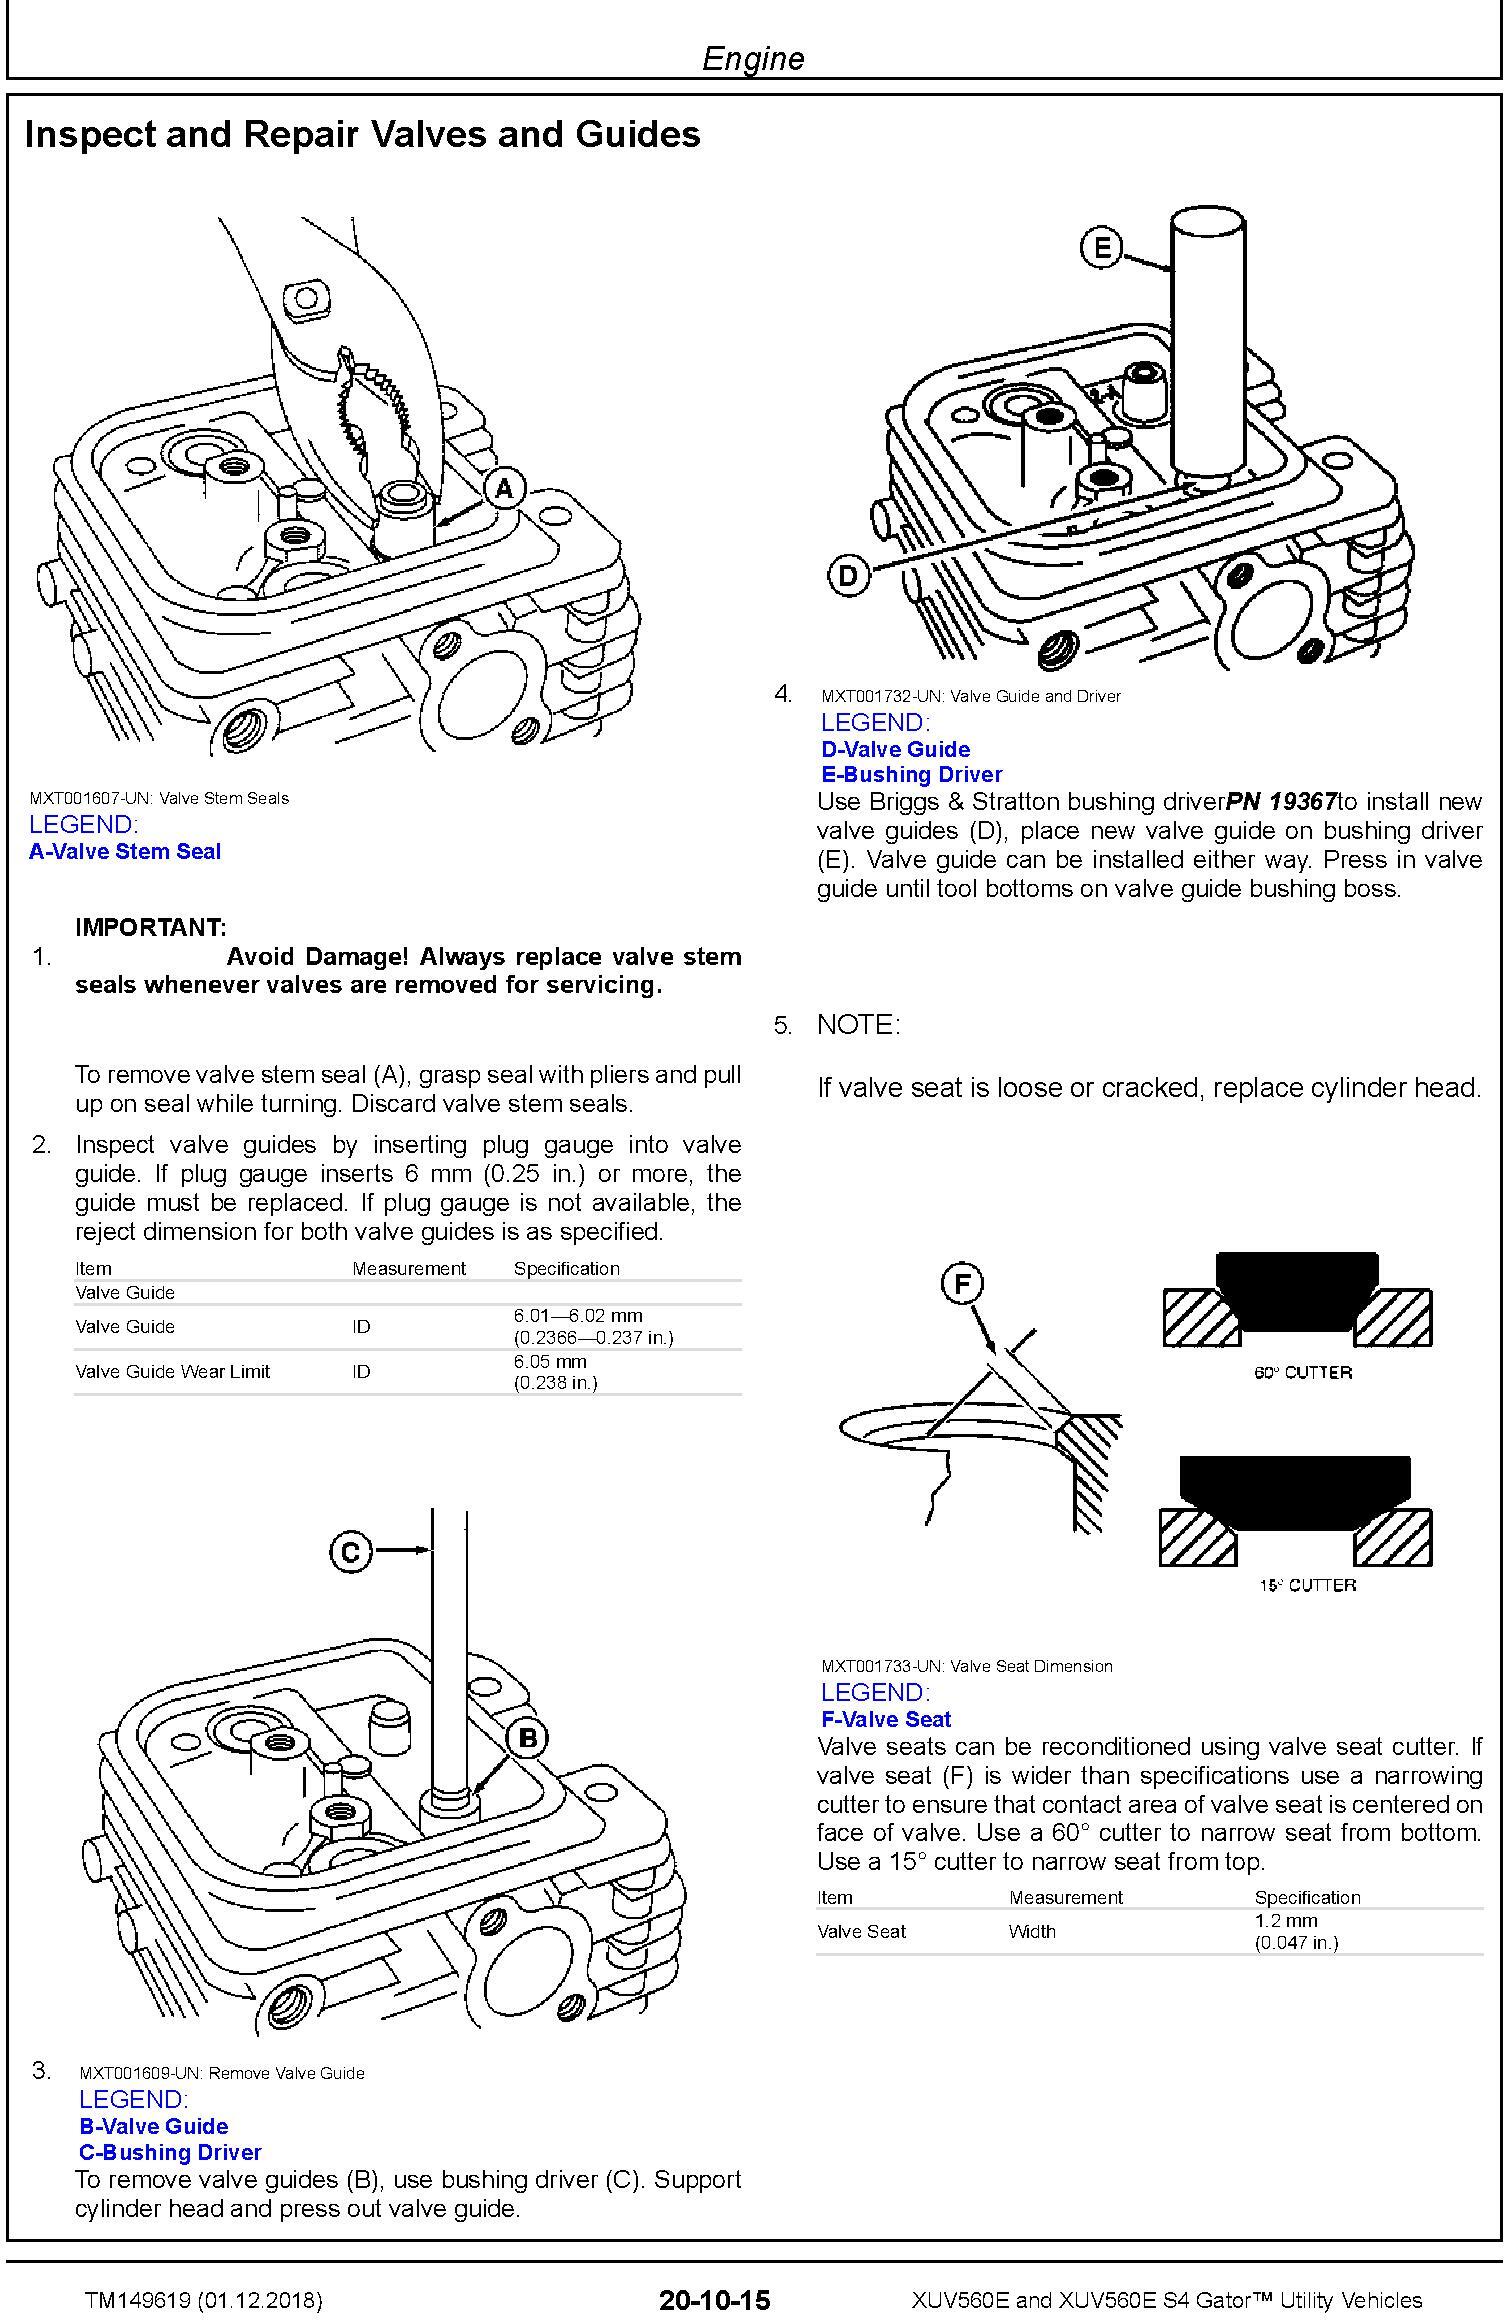 John Deere XUV560E and XUV560E S4 Gator Utility Vehicles (SN. 010001-) Technical Manual (TM149619) - 2